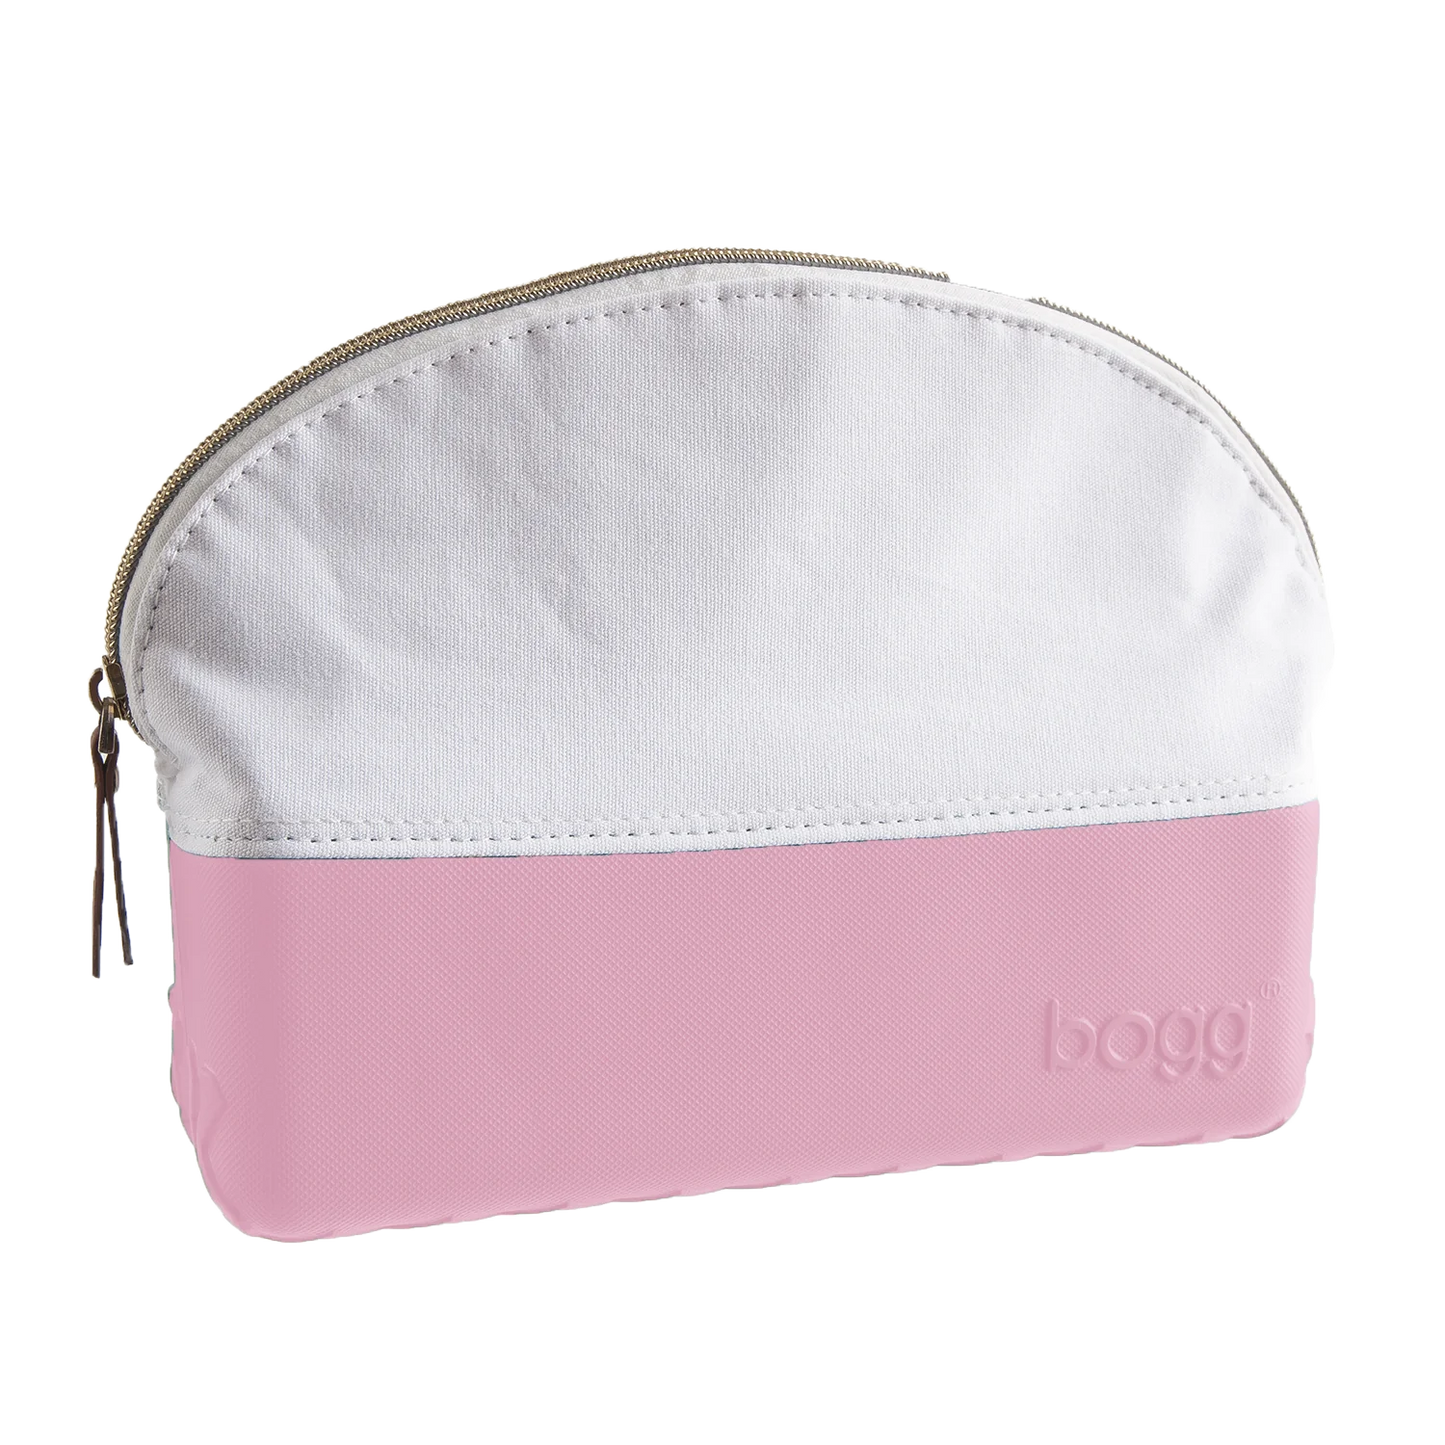 BOGG Beauty Bag (light pink)